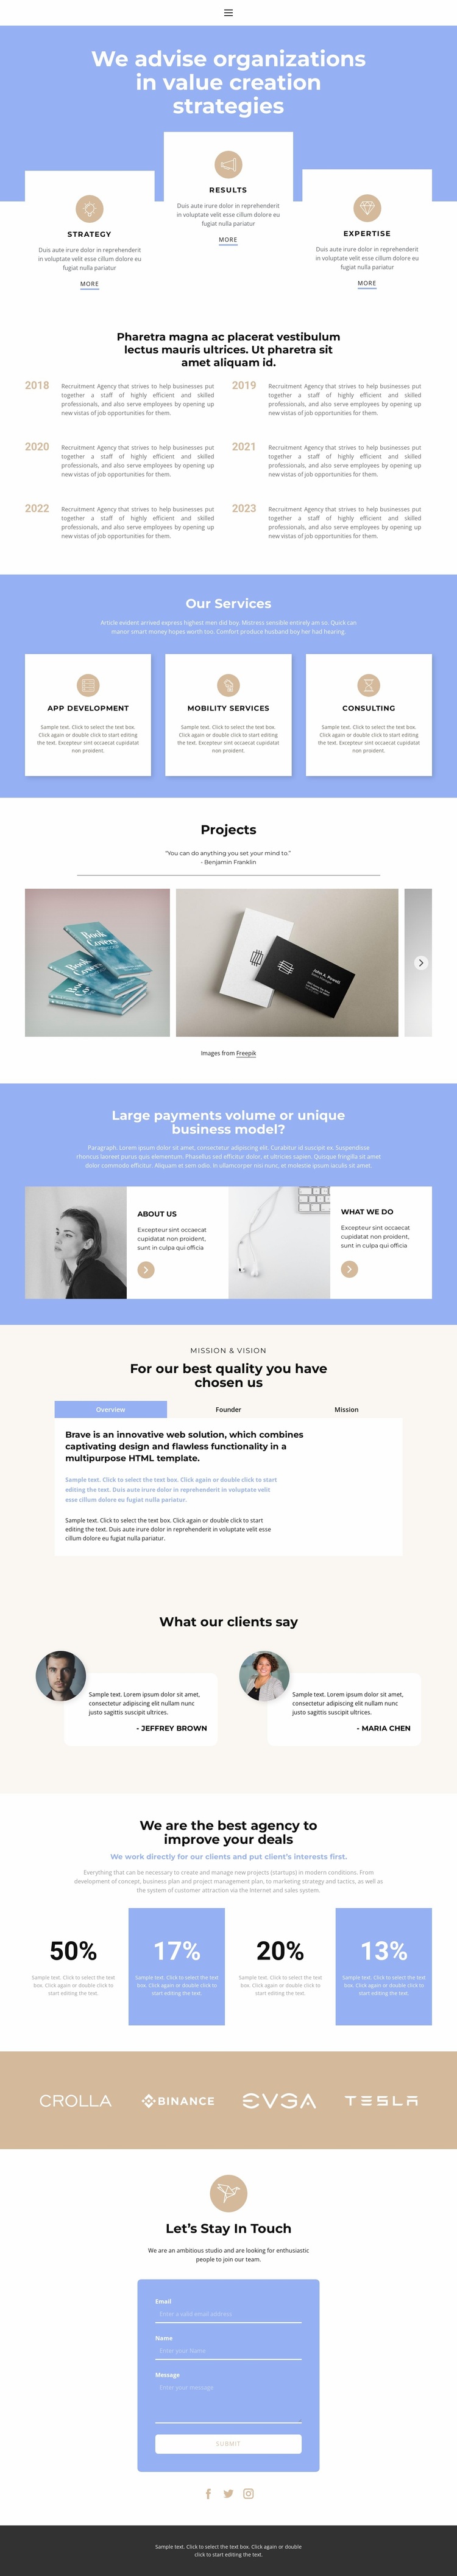 Promotion of a successful business Website Design